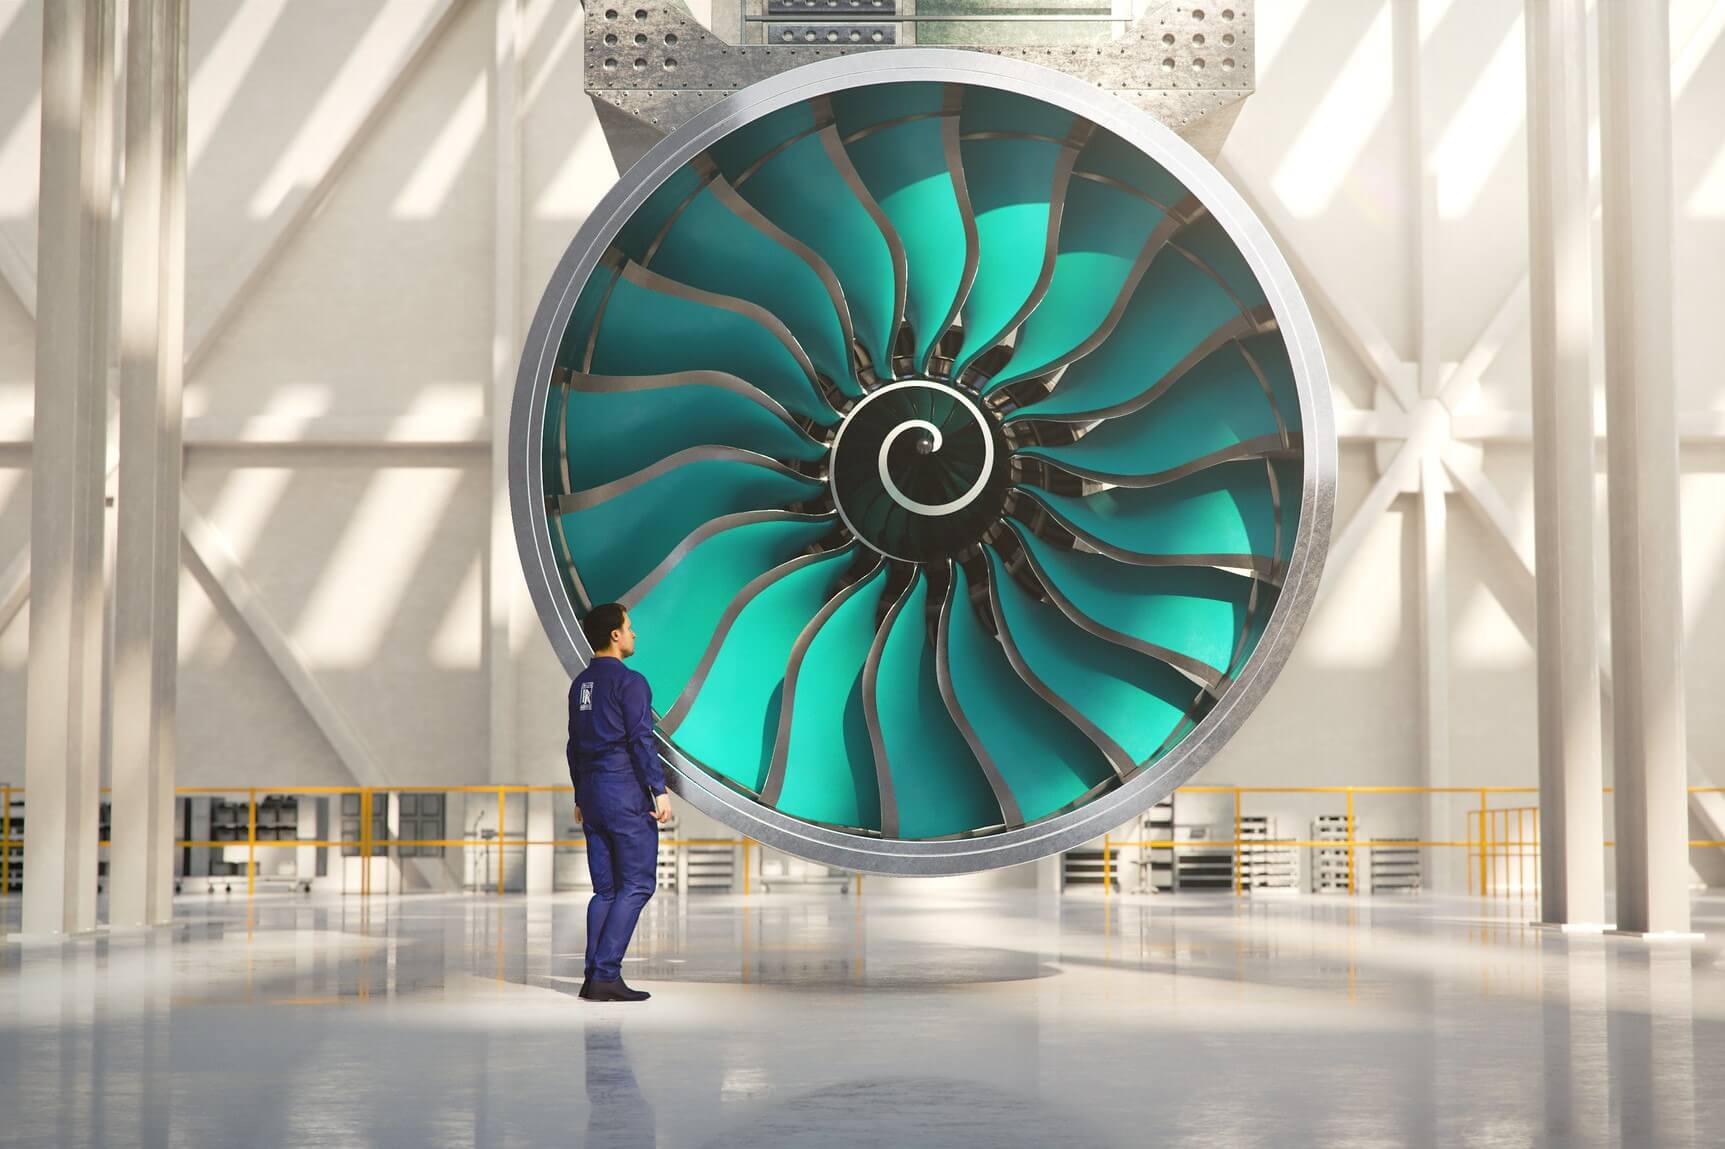  Rolls-Royce starts building UltraFan, the largest jet engine